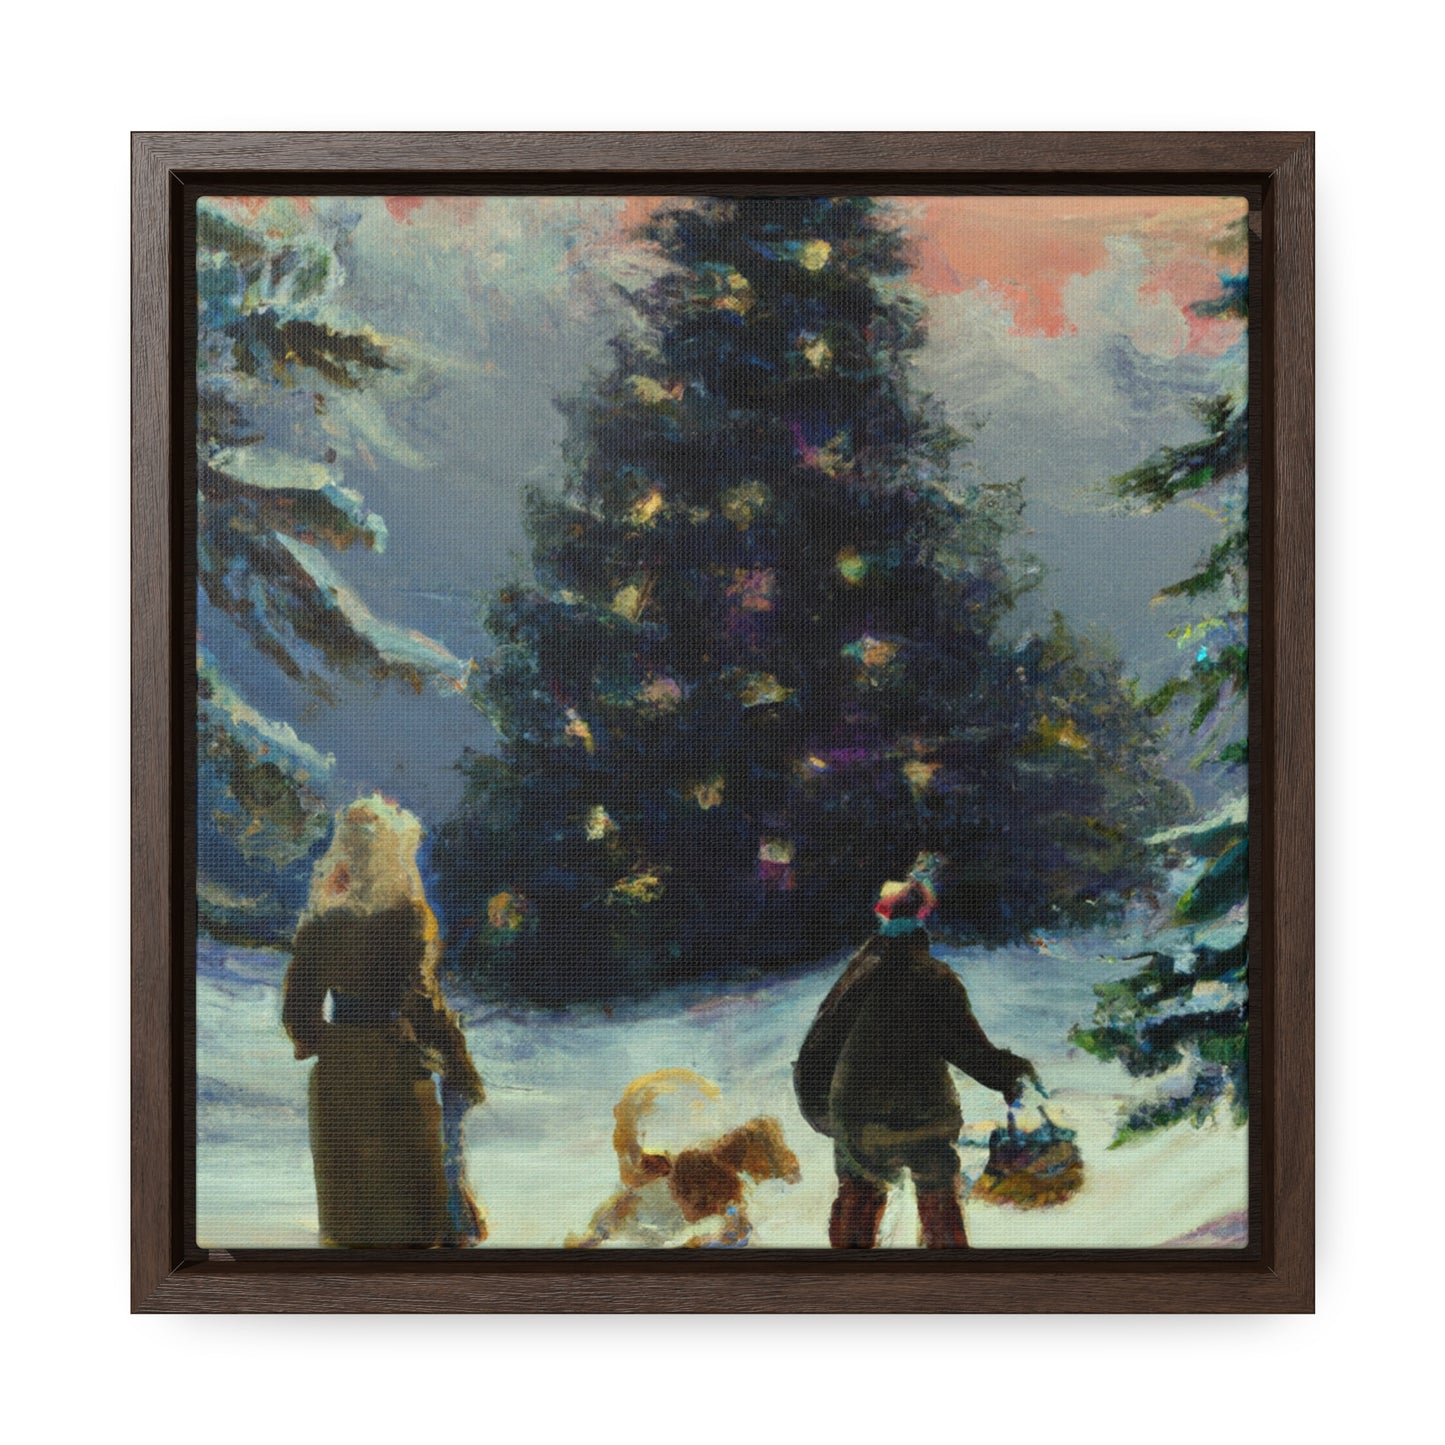 The Christmas Tree Hunt - Canvas Wall Art: Inez Clementina De Merrywinter - Christmas Wall Decor, Framed Wall Art Print